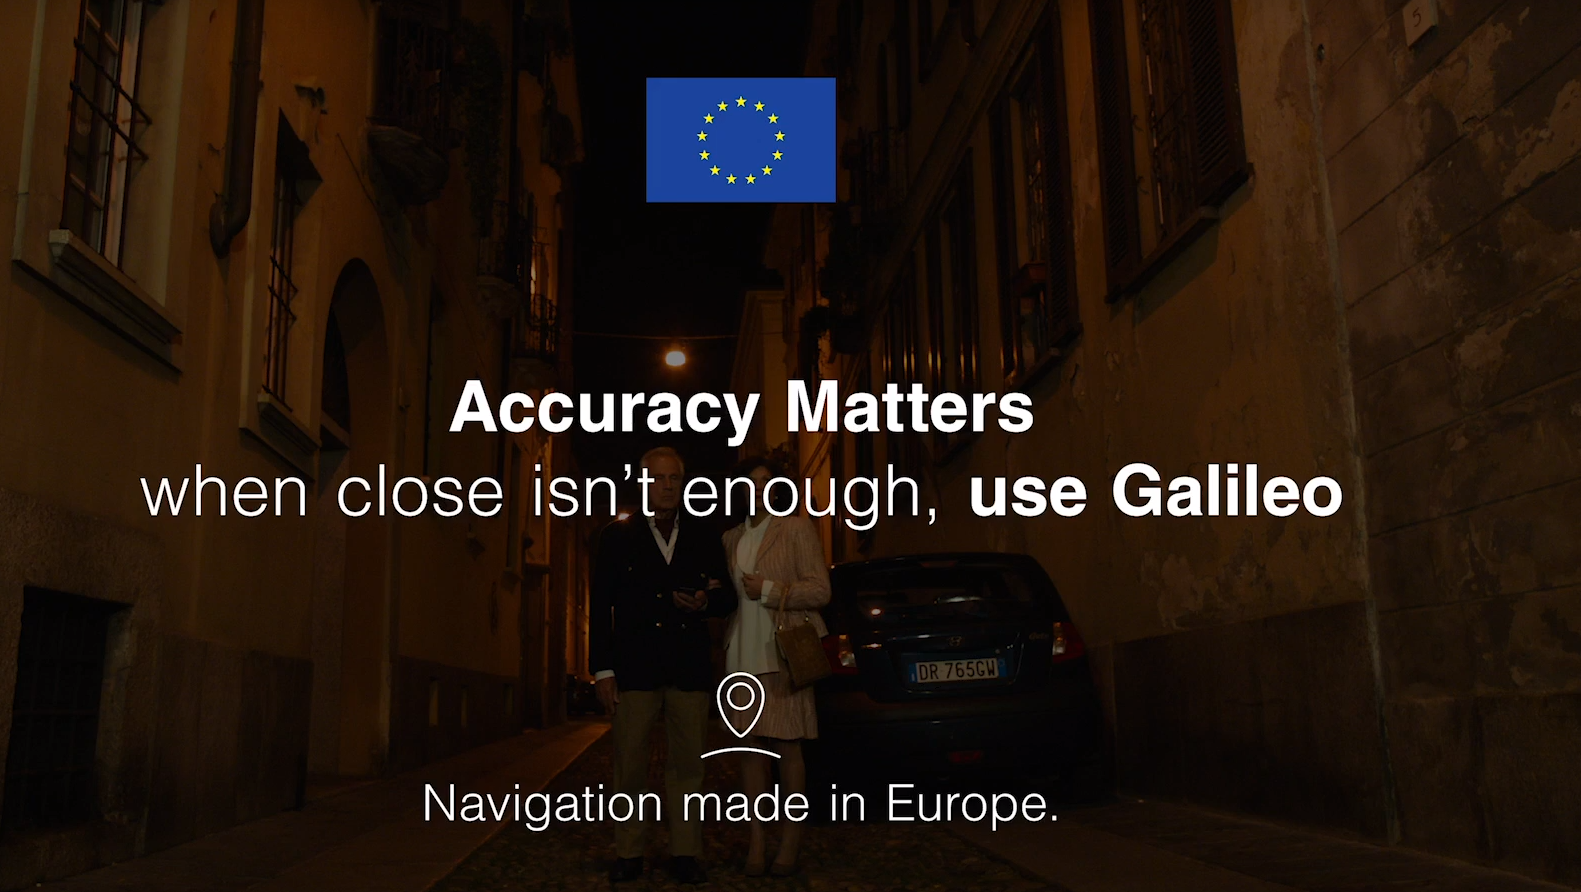 GSA “Accuracy Matters” キャンペーン開始